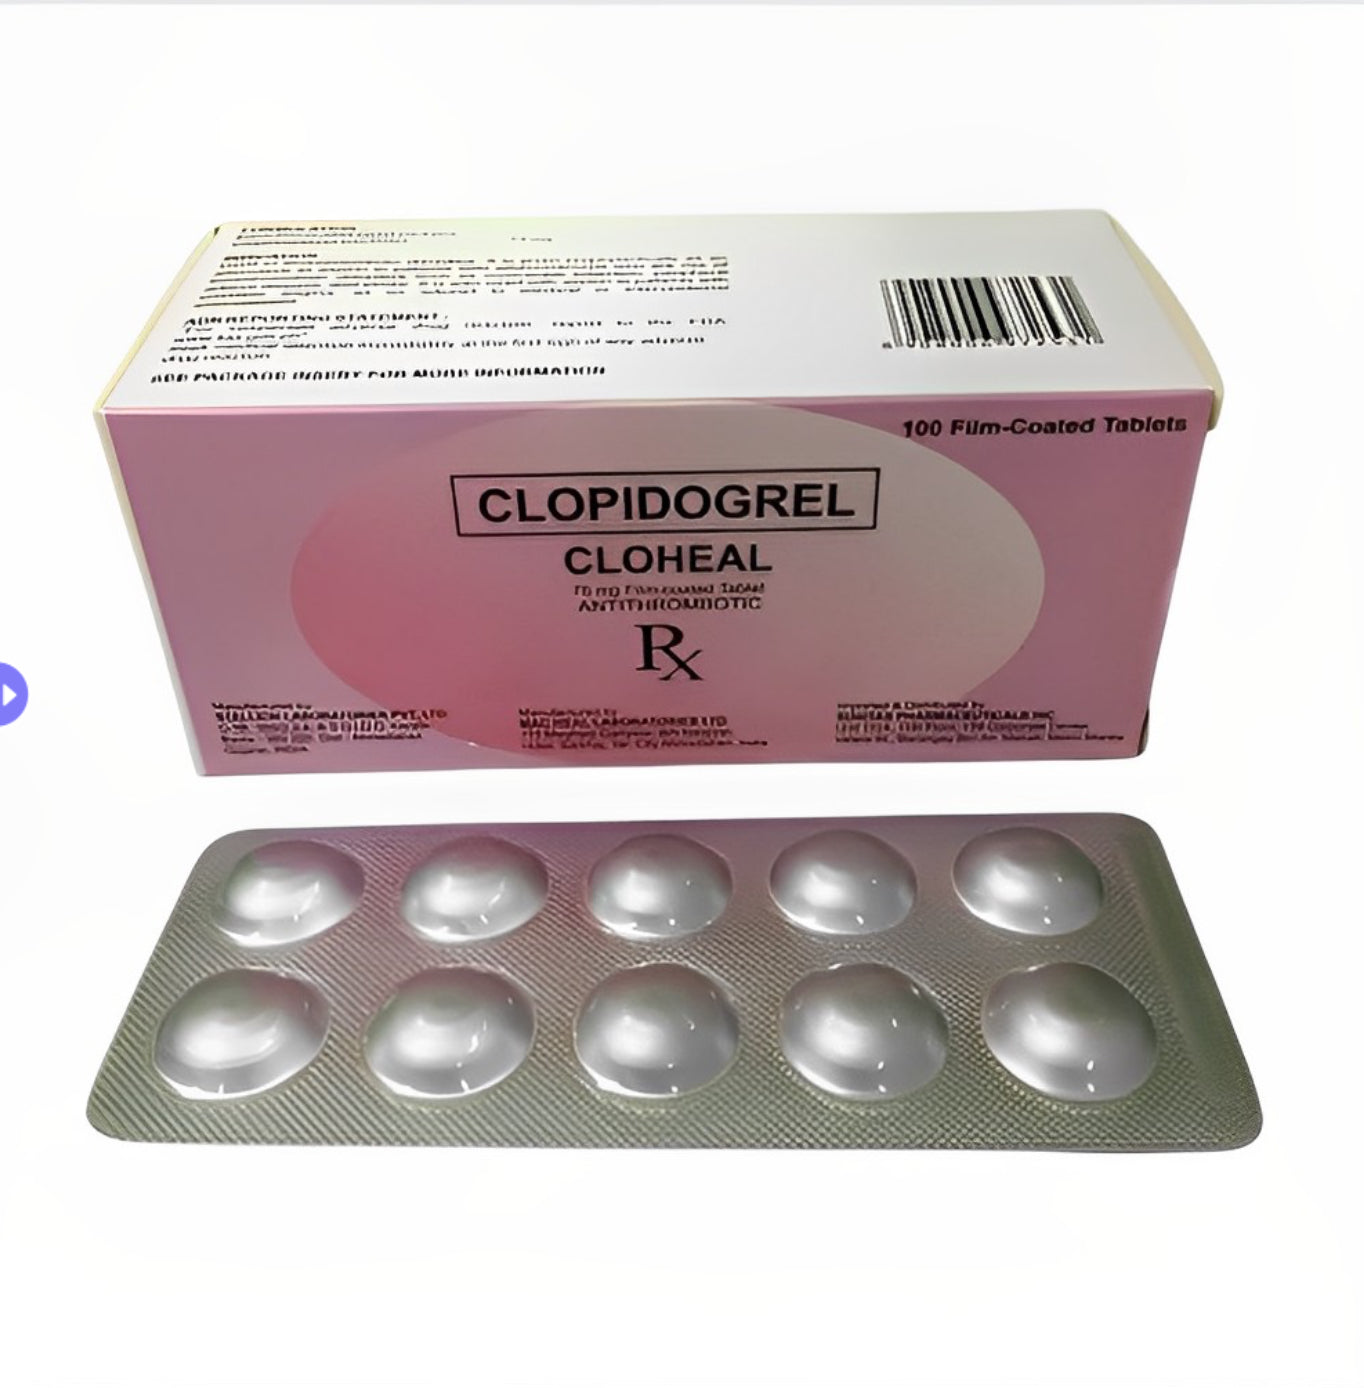 PLOGREL Clopidogrel 75mg Tablet x 1